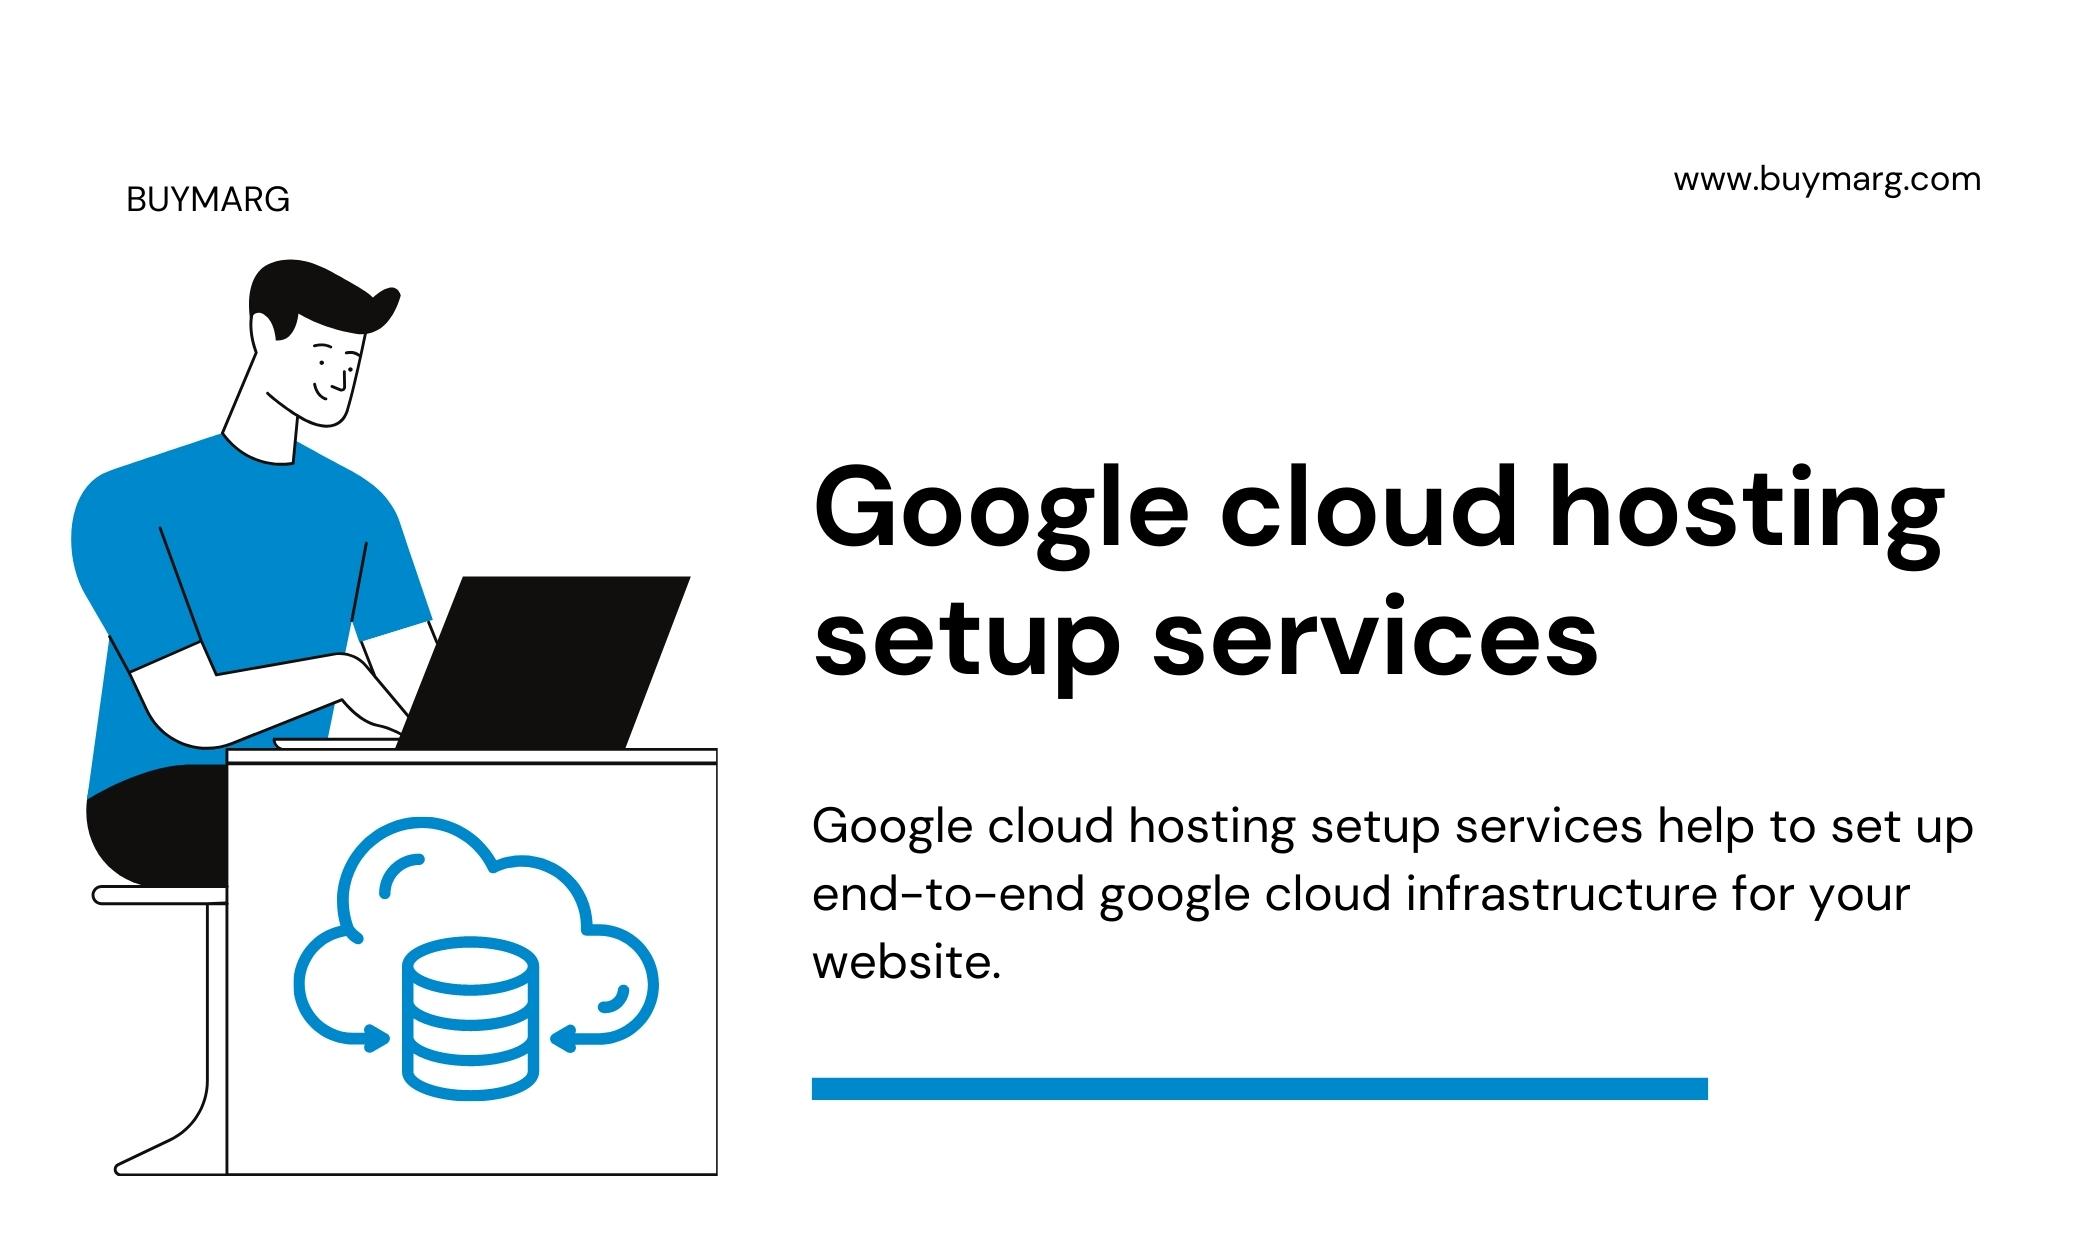 Google cloud hosting setup services